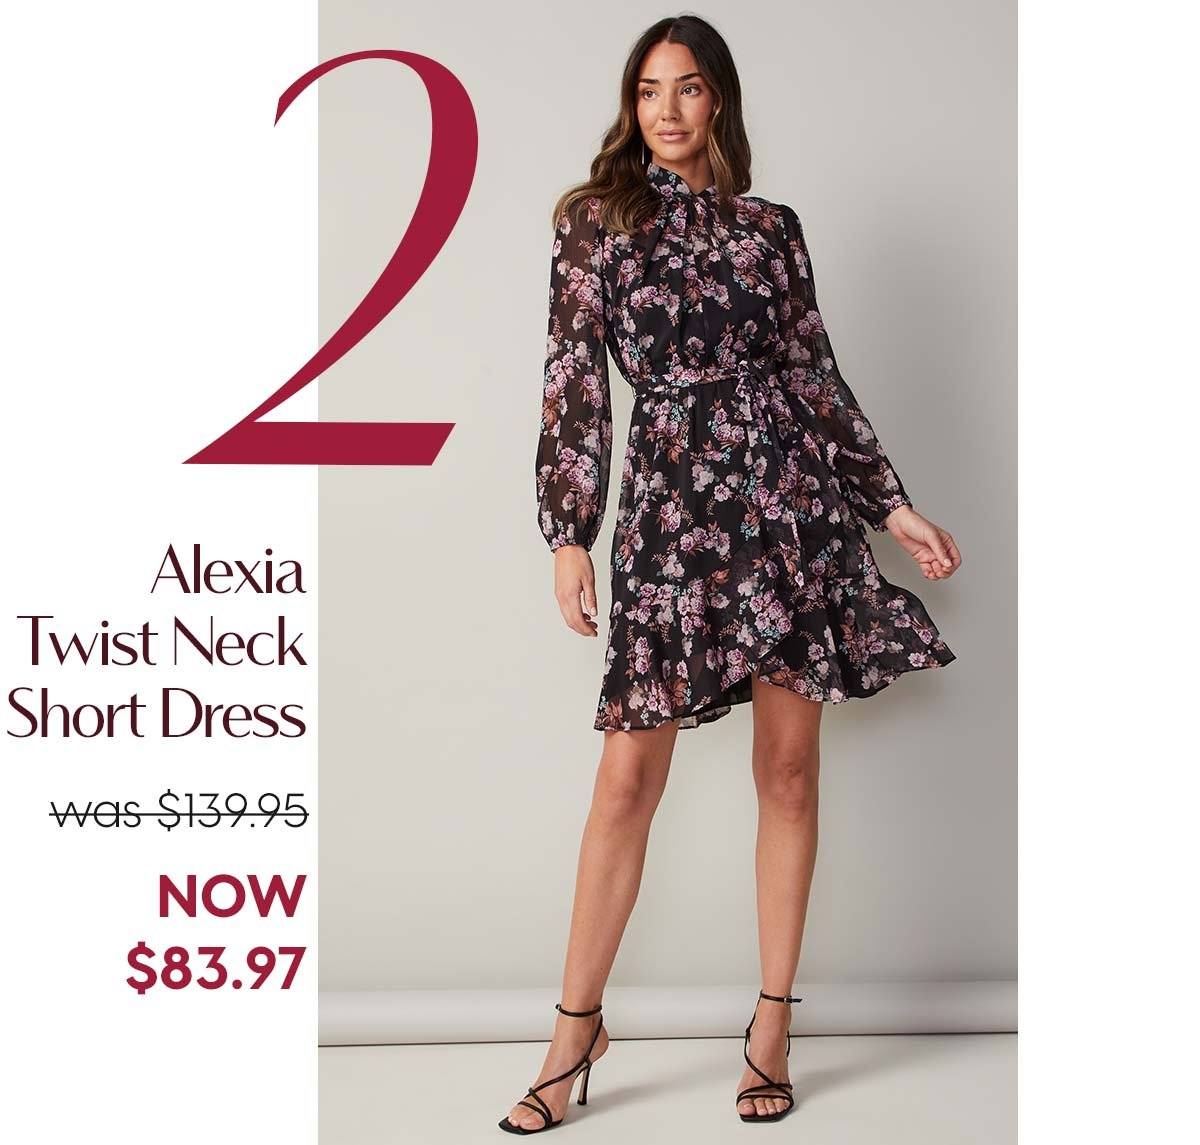 2. Alexia Twist Neck Short Dress was $139.95 NOW $83.97